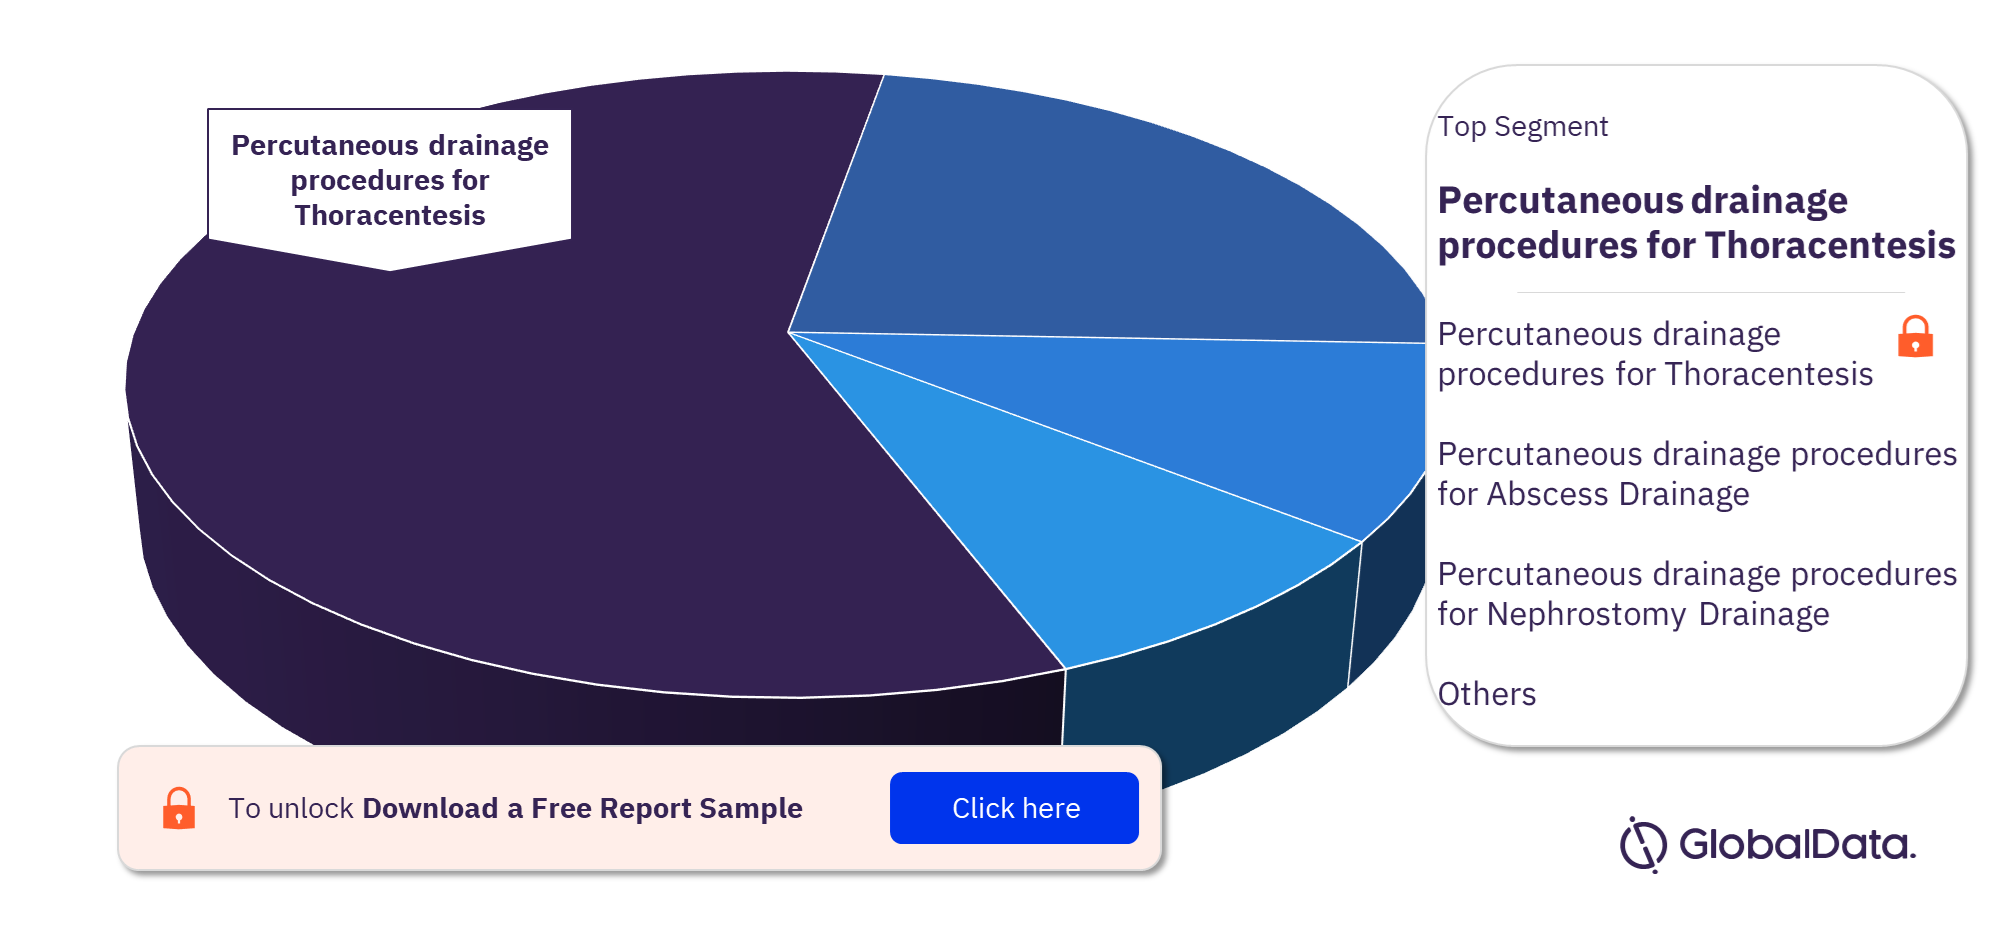 APAC Percutaneous Drainage Procedures Market Analysis by Segments, 2022 (%)